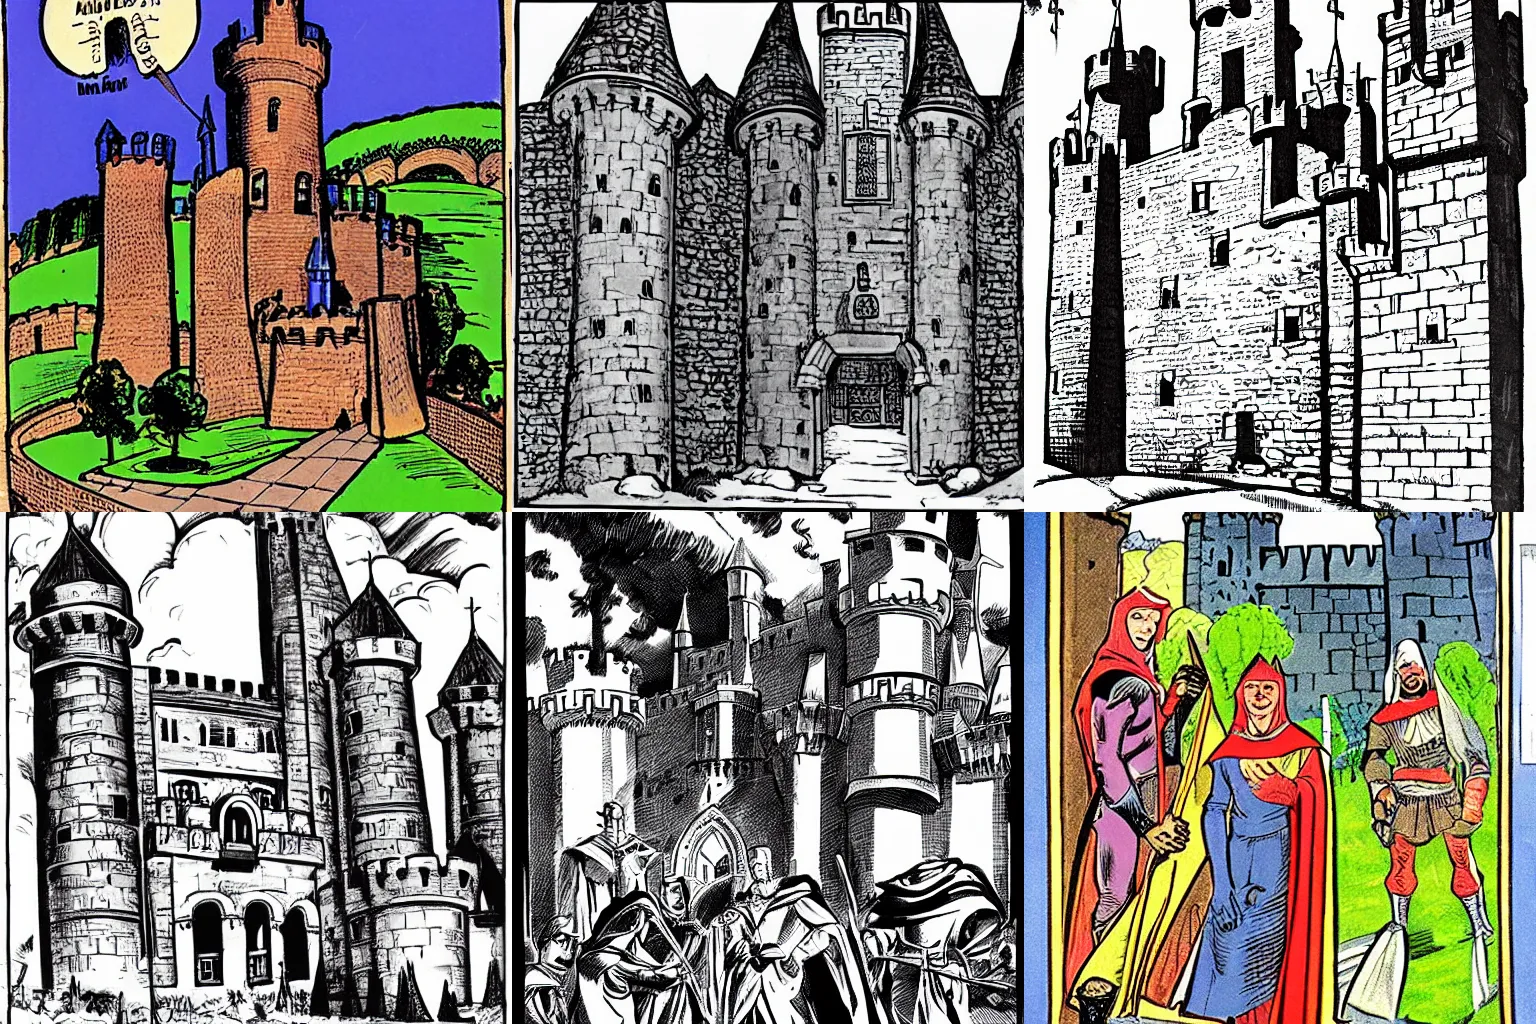 Prompt: medieval castle, by Gil Kane